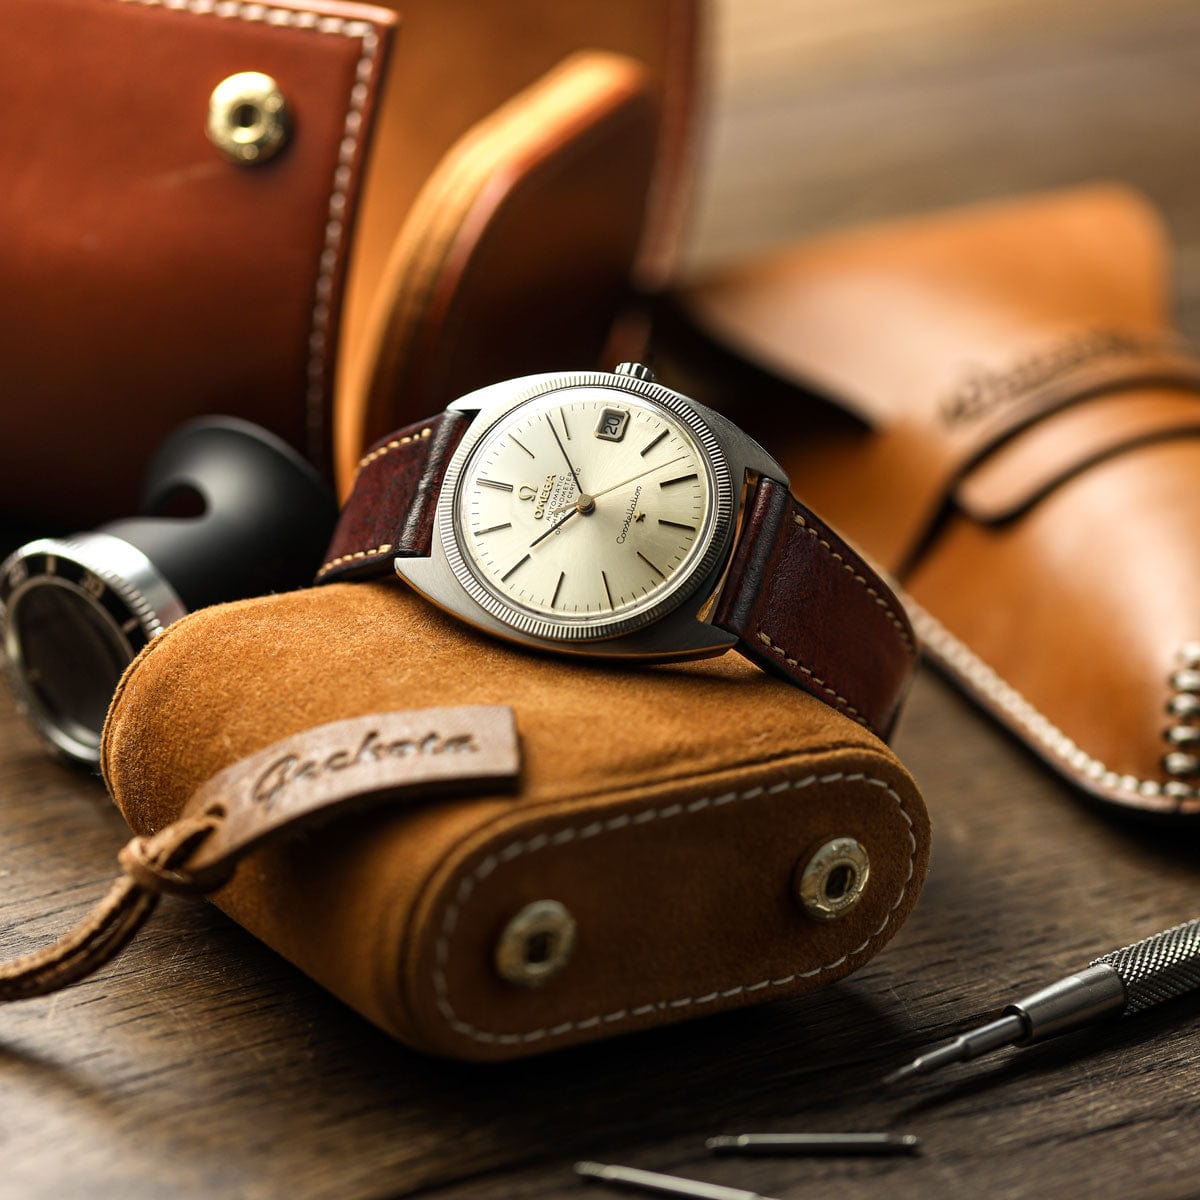 Radstock Vintage Genuine Leather Watch Strap - Vintage Red